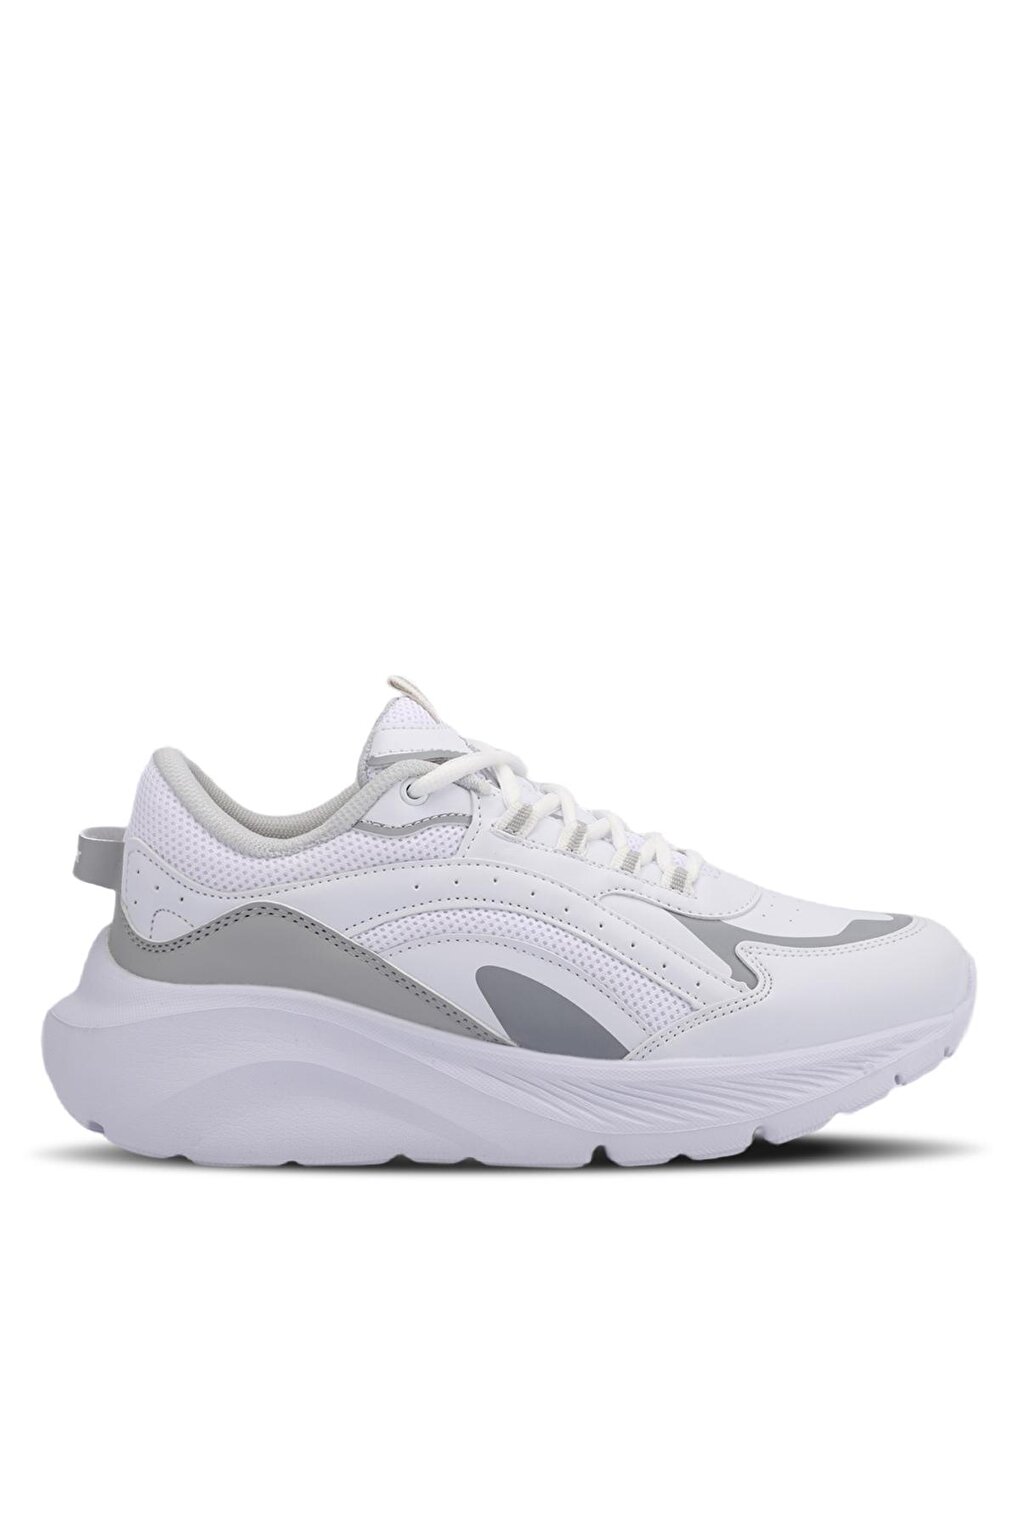 BETHEL Sneaker Женская обувь Белый/Серый SLAZENGER daphne sneaker женская обувь белый розовый slazenger